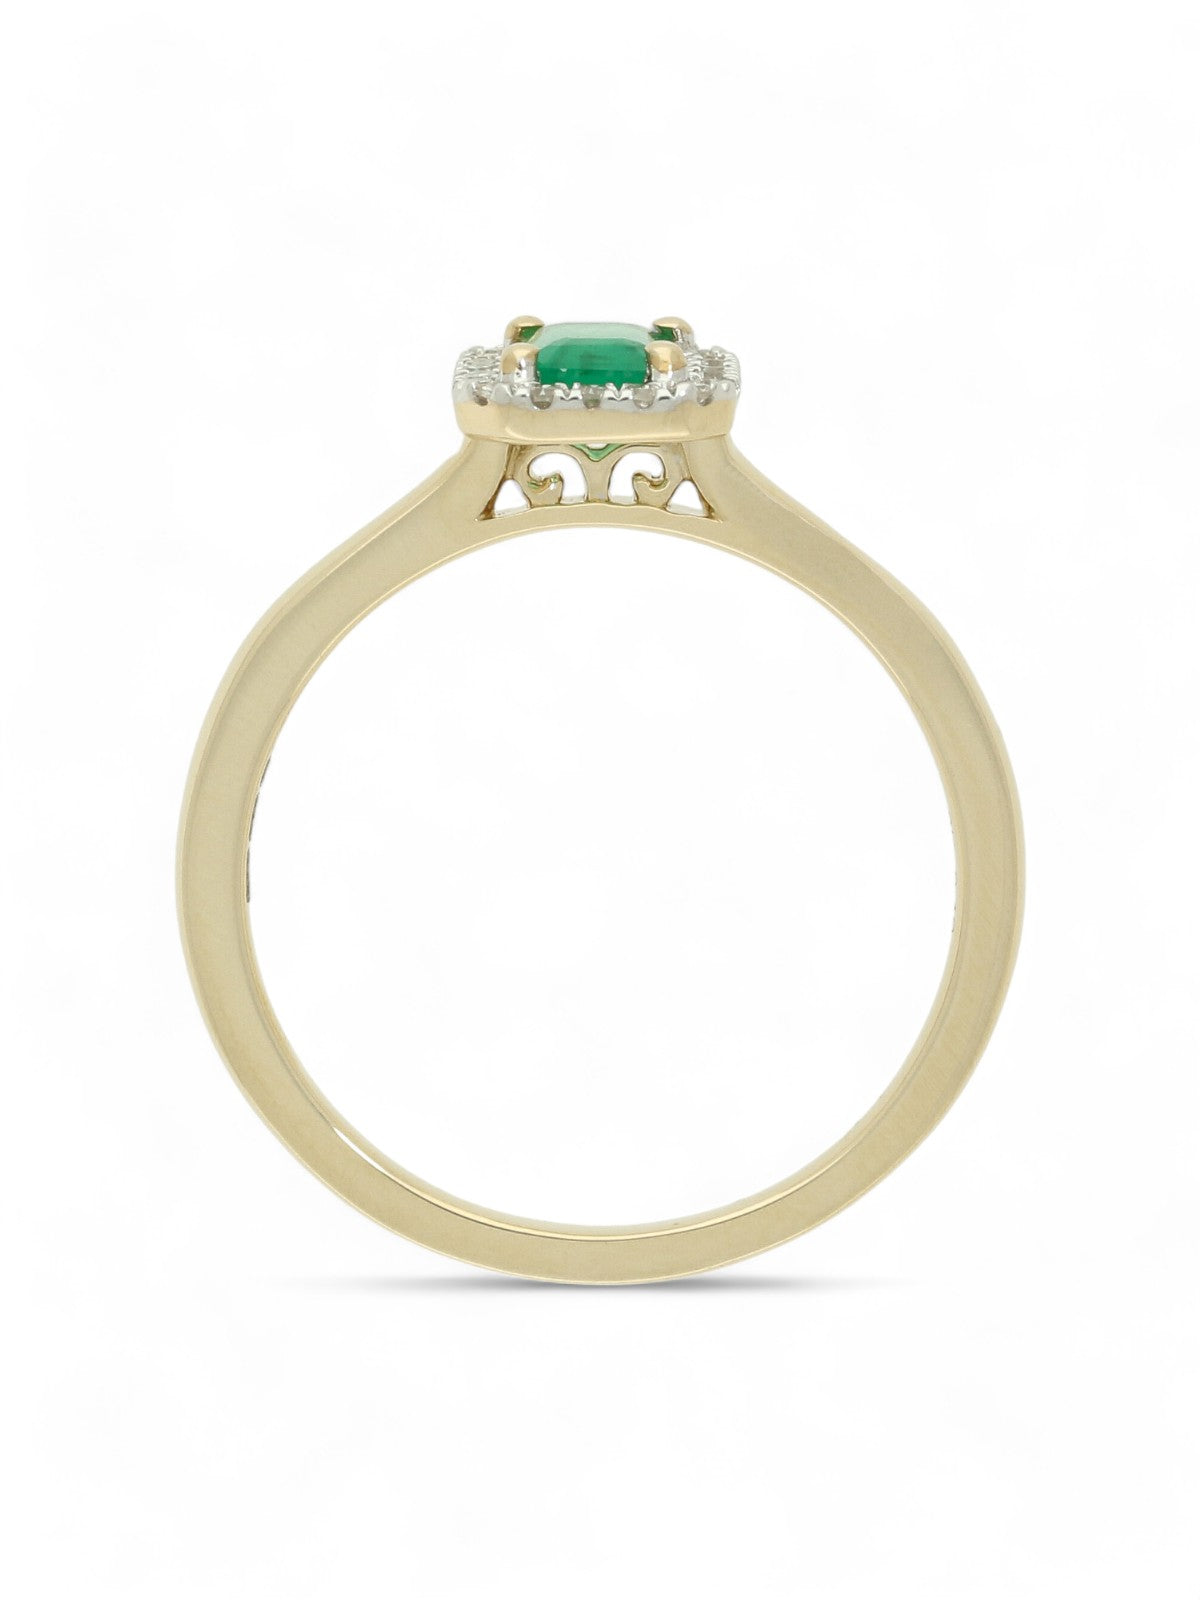 Emerald & Diamond Emerald Cut Halo Ring in 9ct Yellow Gold